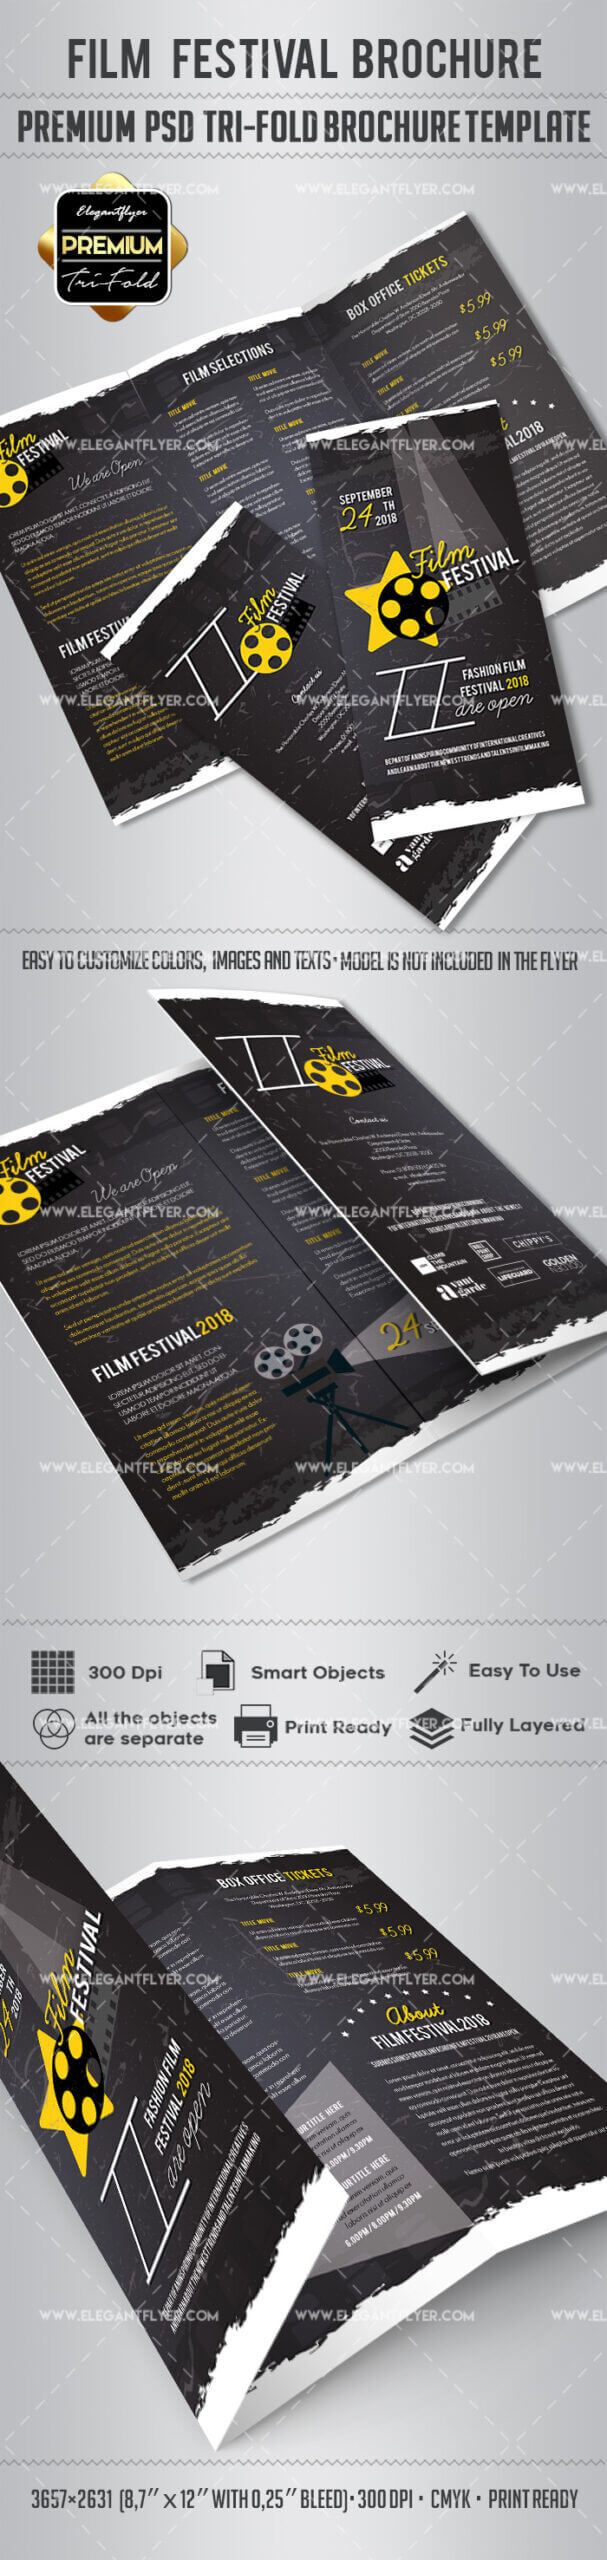 Film Festival Brochure Design In Film Festival Brochure Template